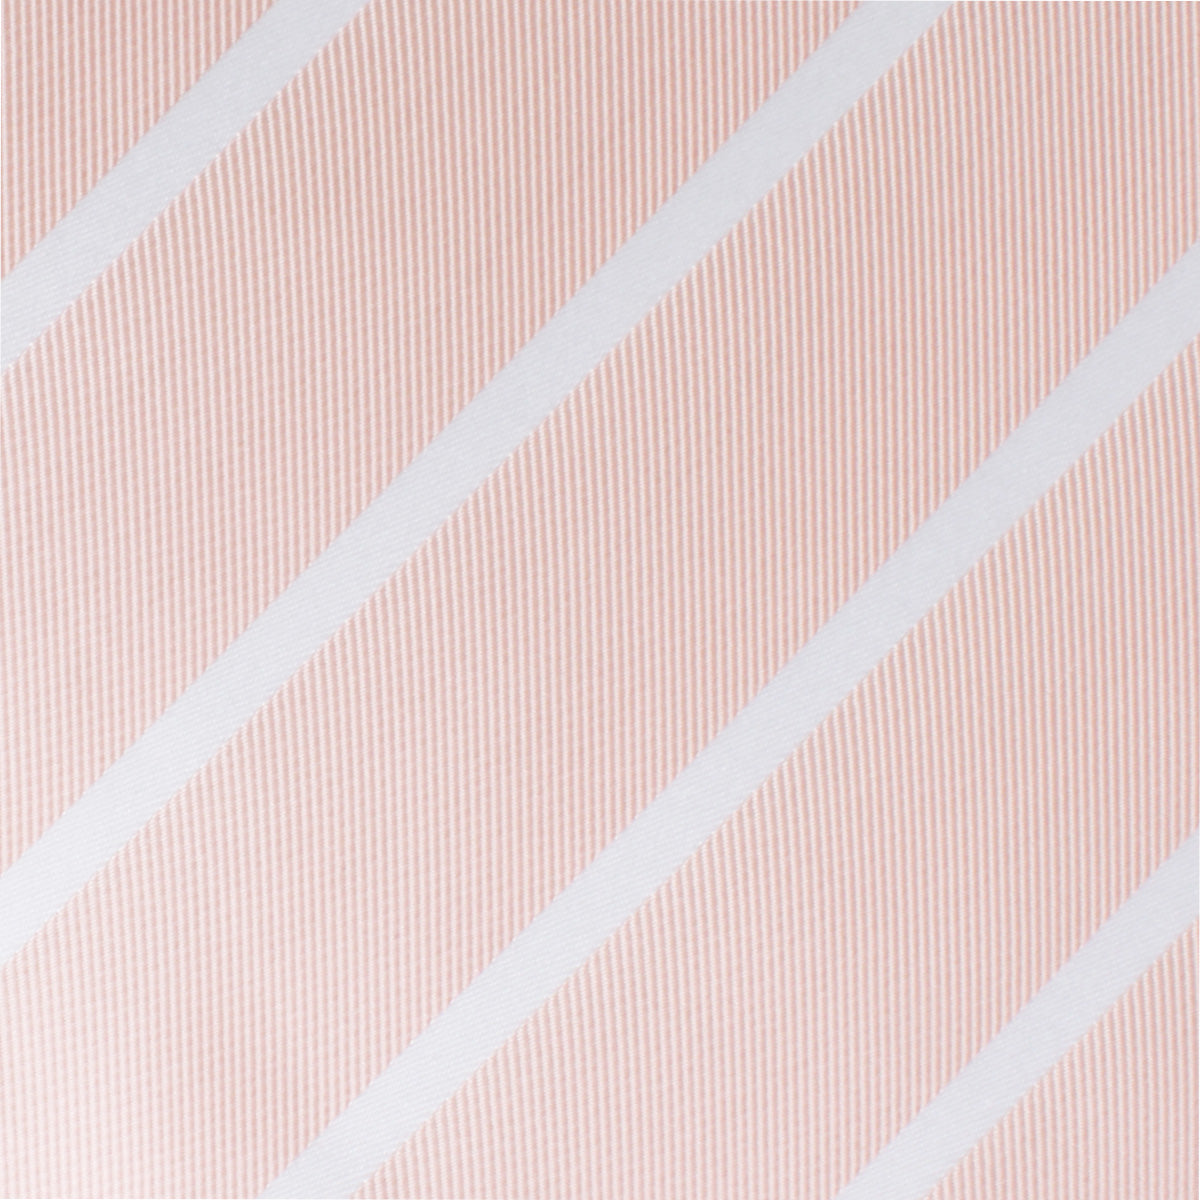 Blush Pink Striped Pocket Square Fabric